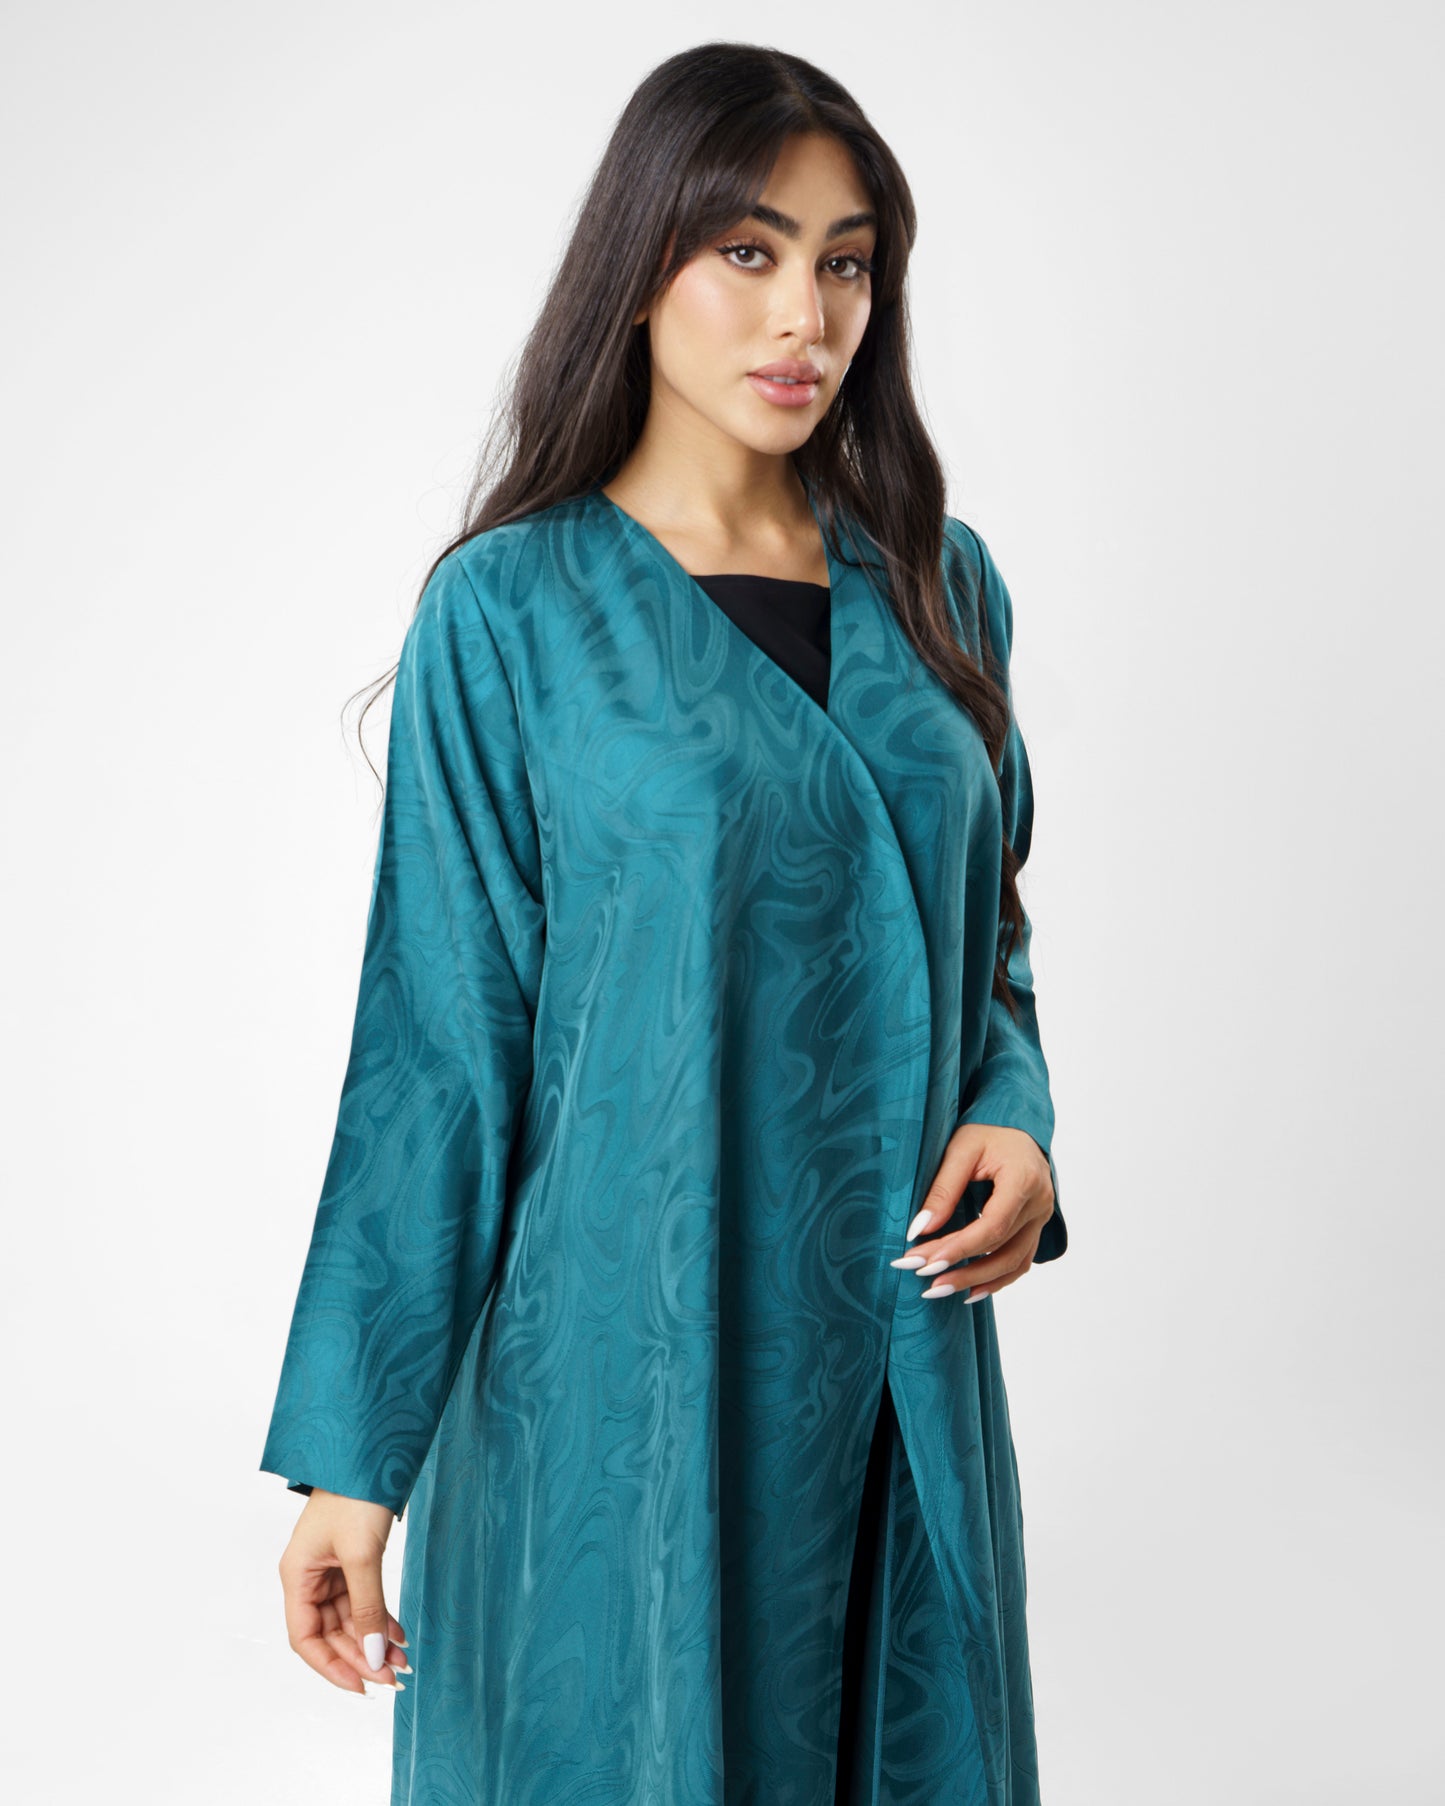 Textured Turquoise Abaya